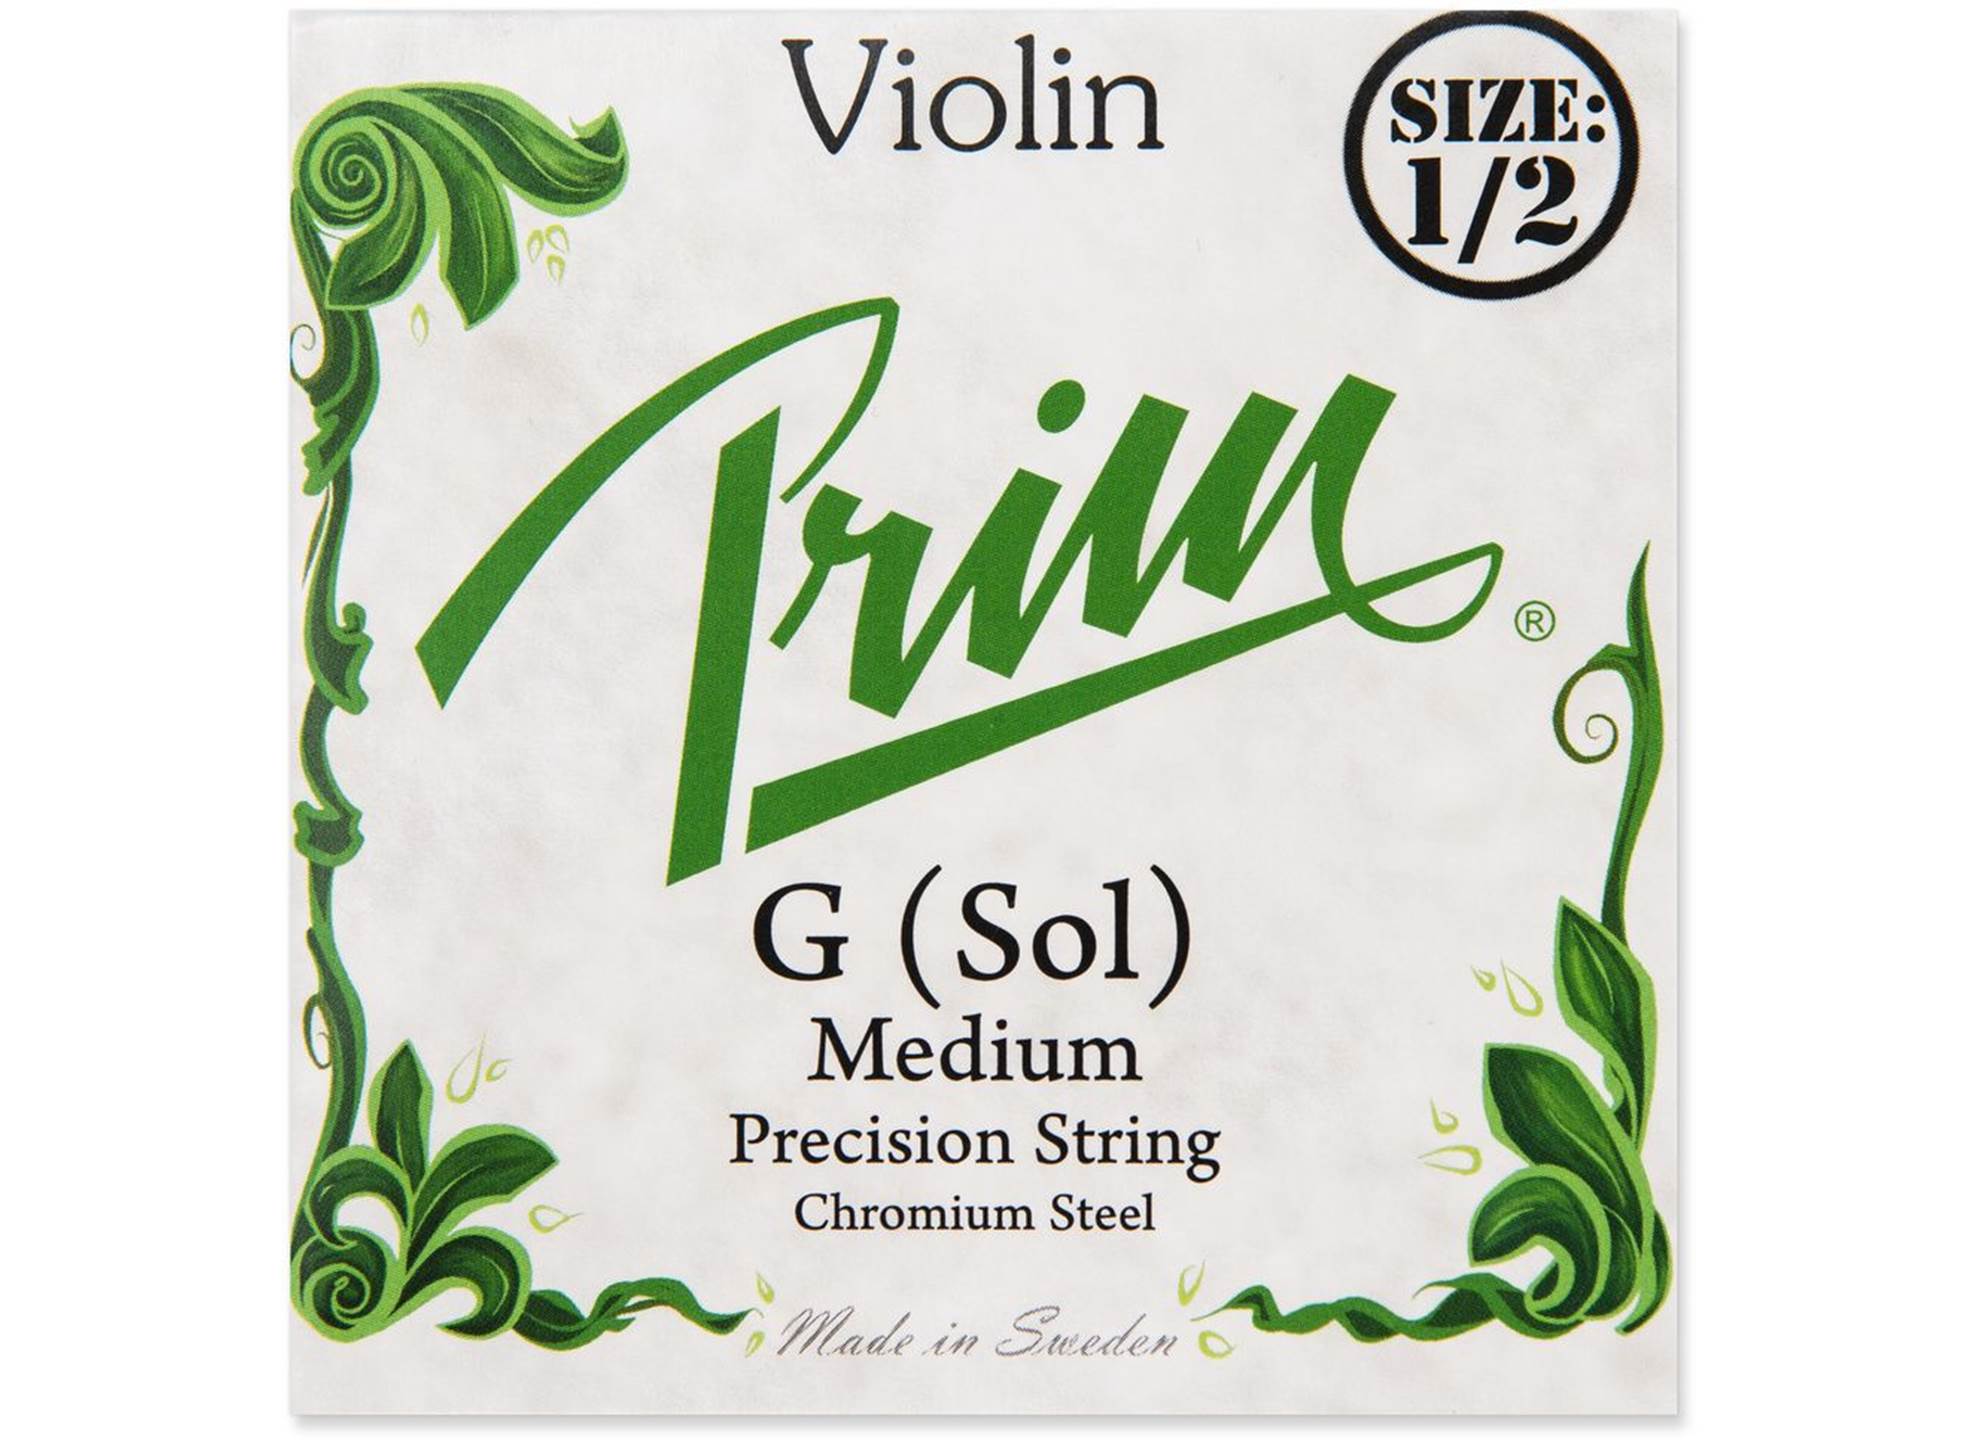 Violin 1/2 G